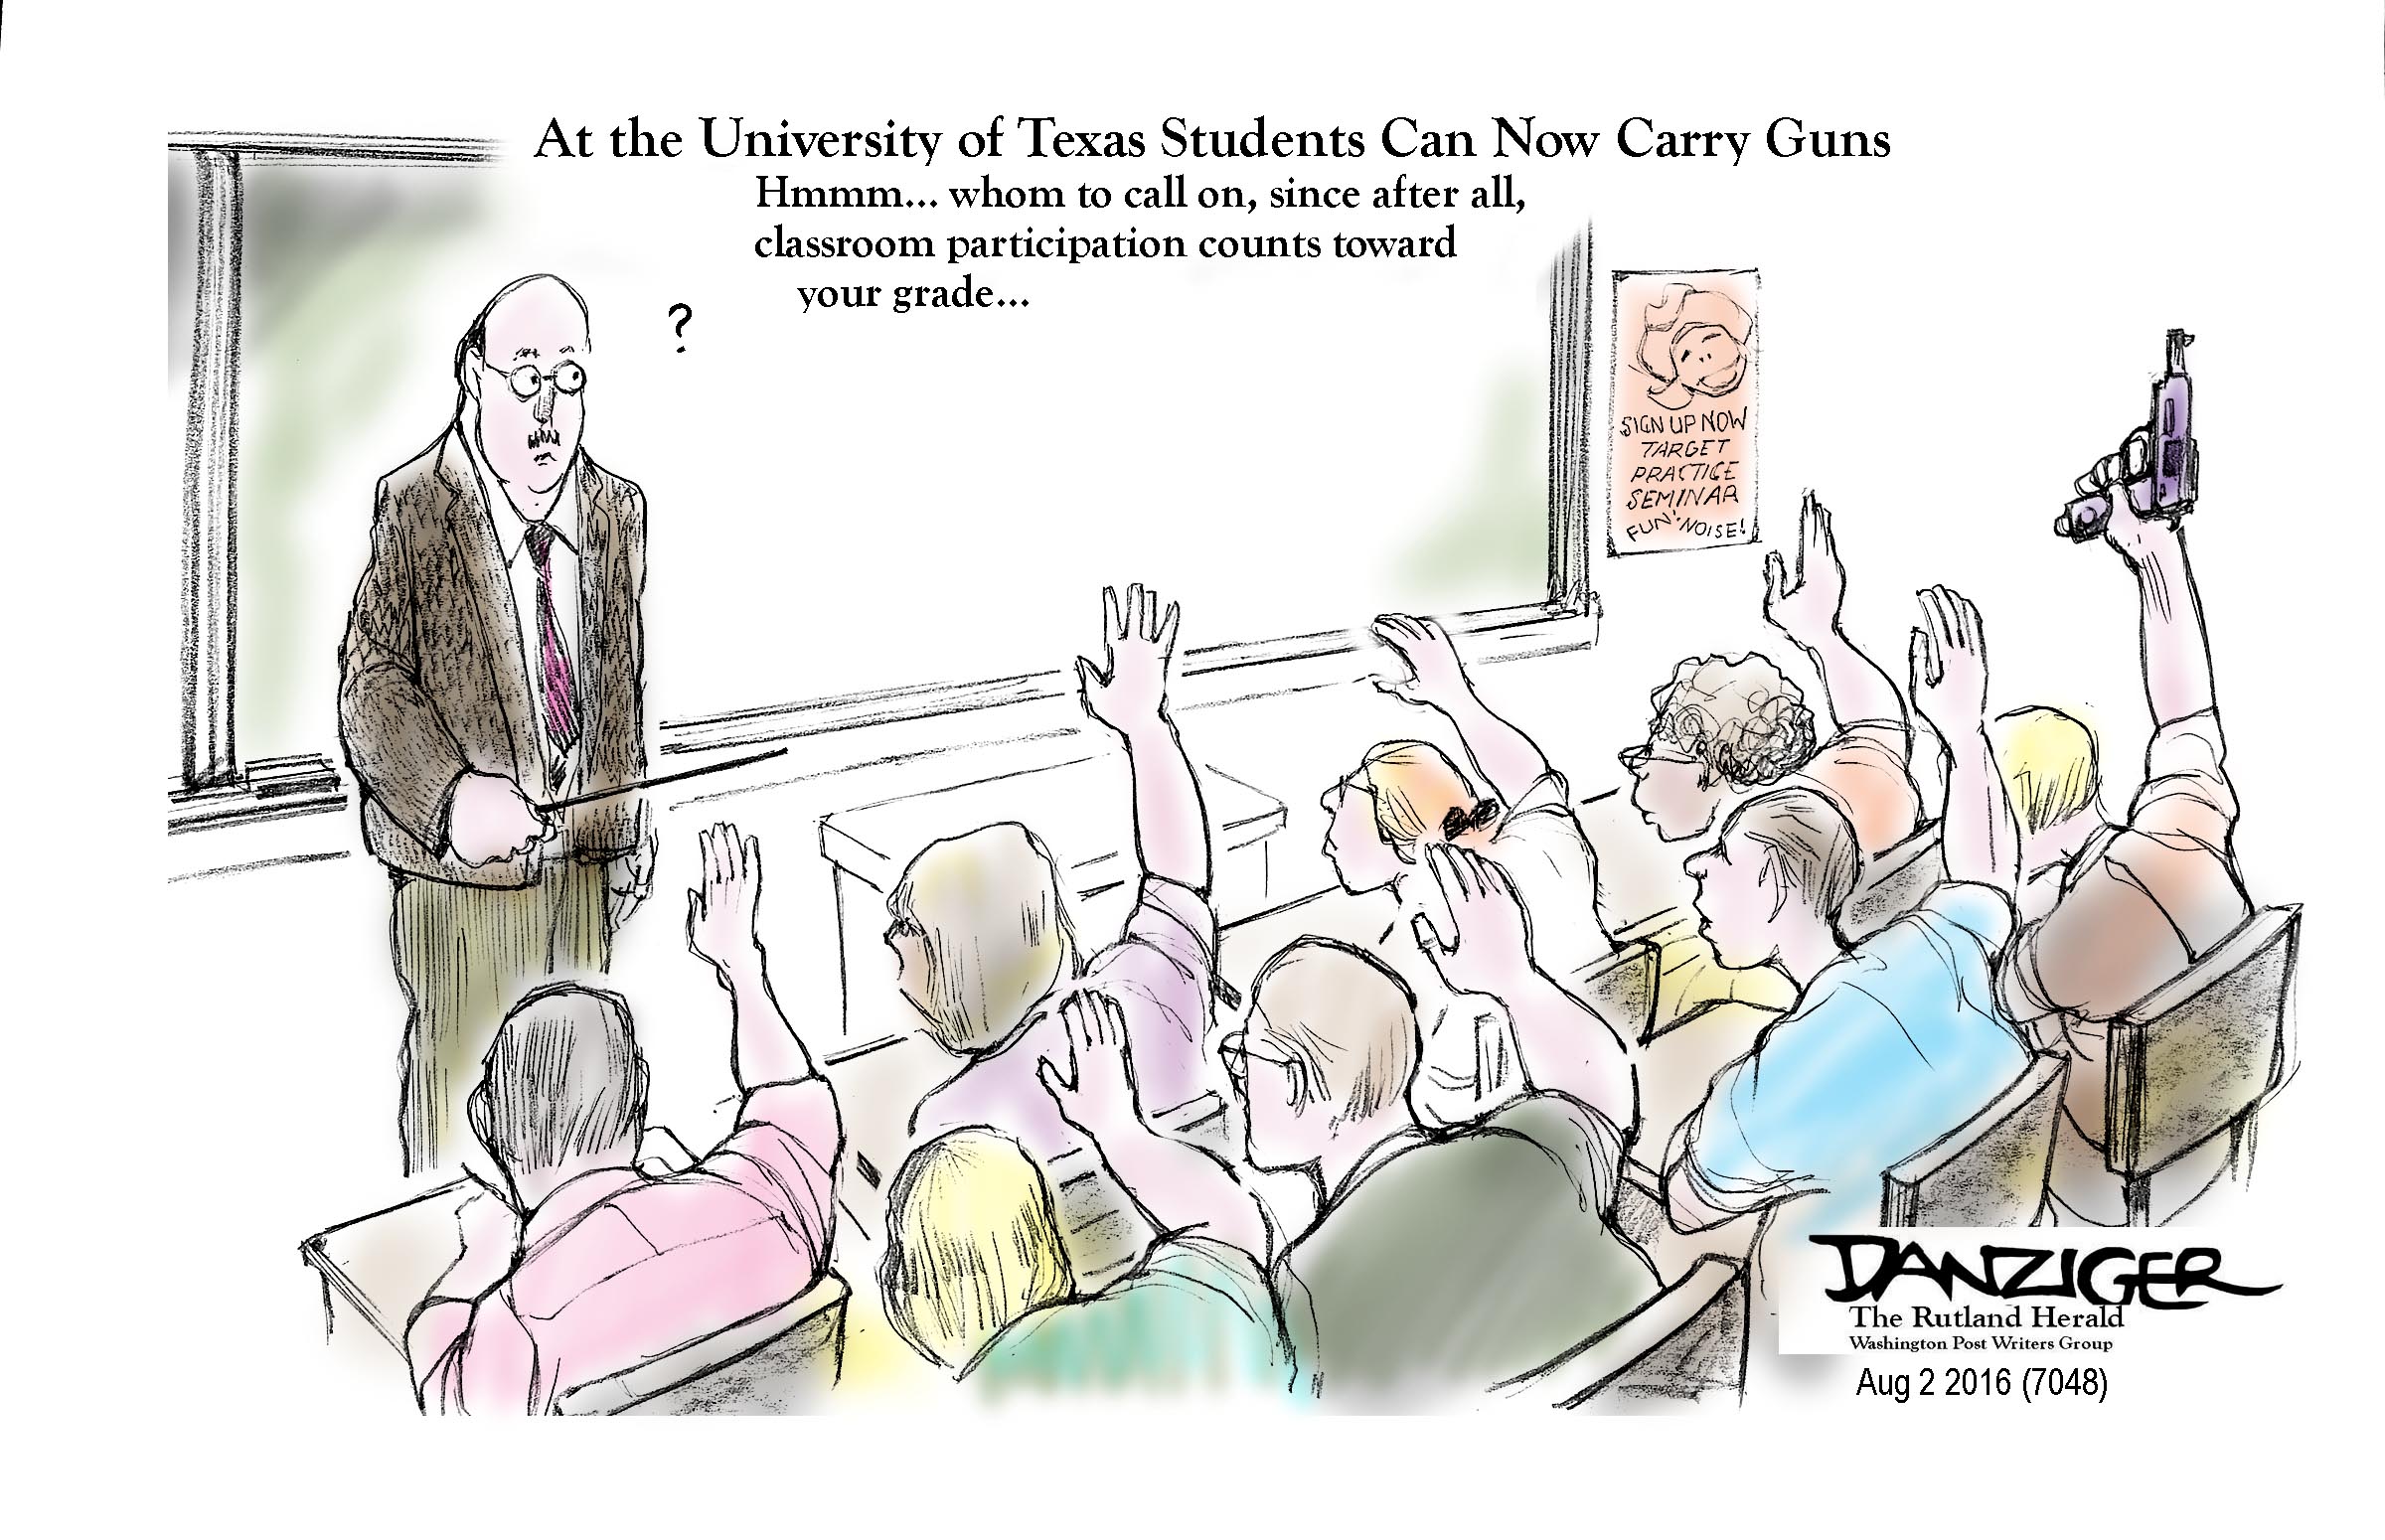 University of Texas, guns on campus, political cartoon